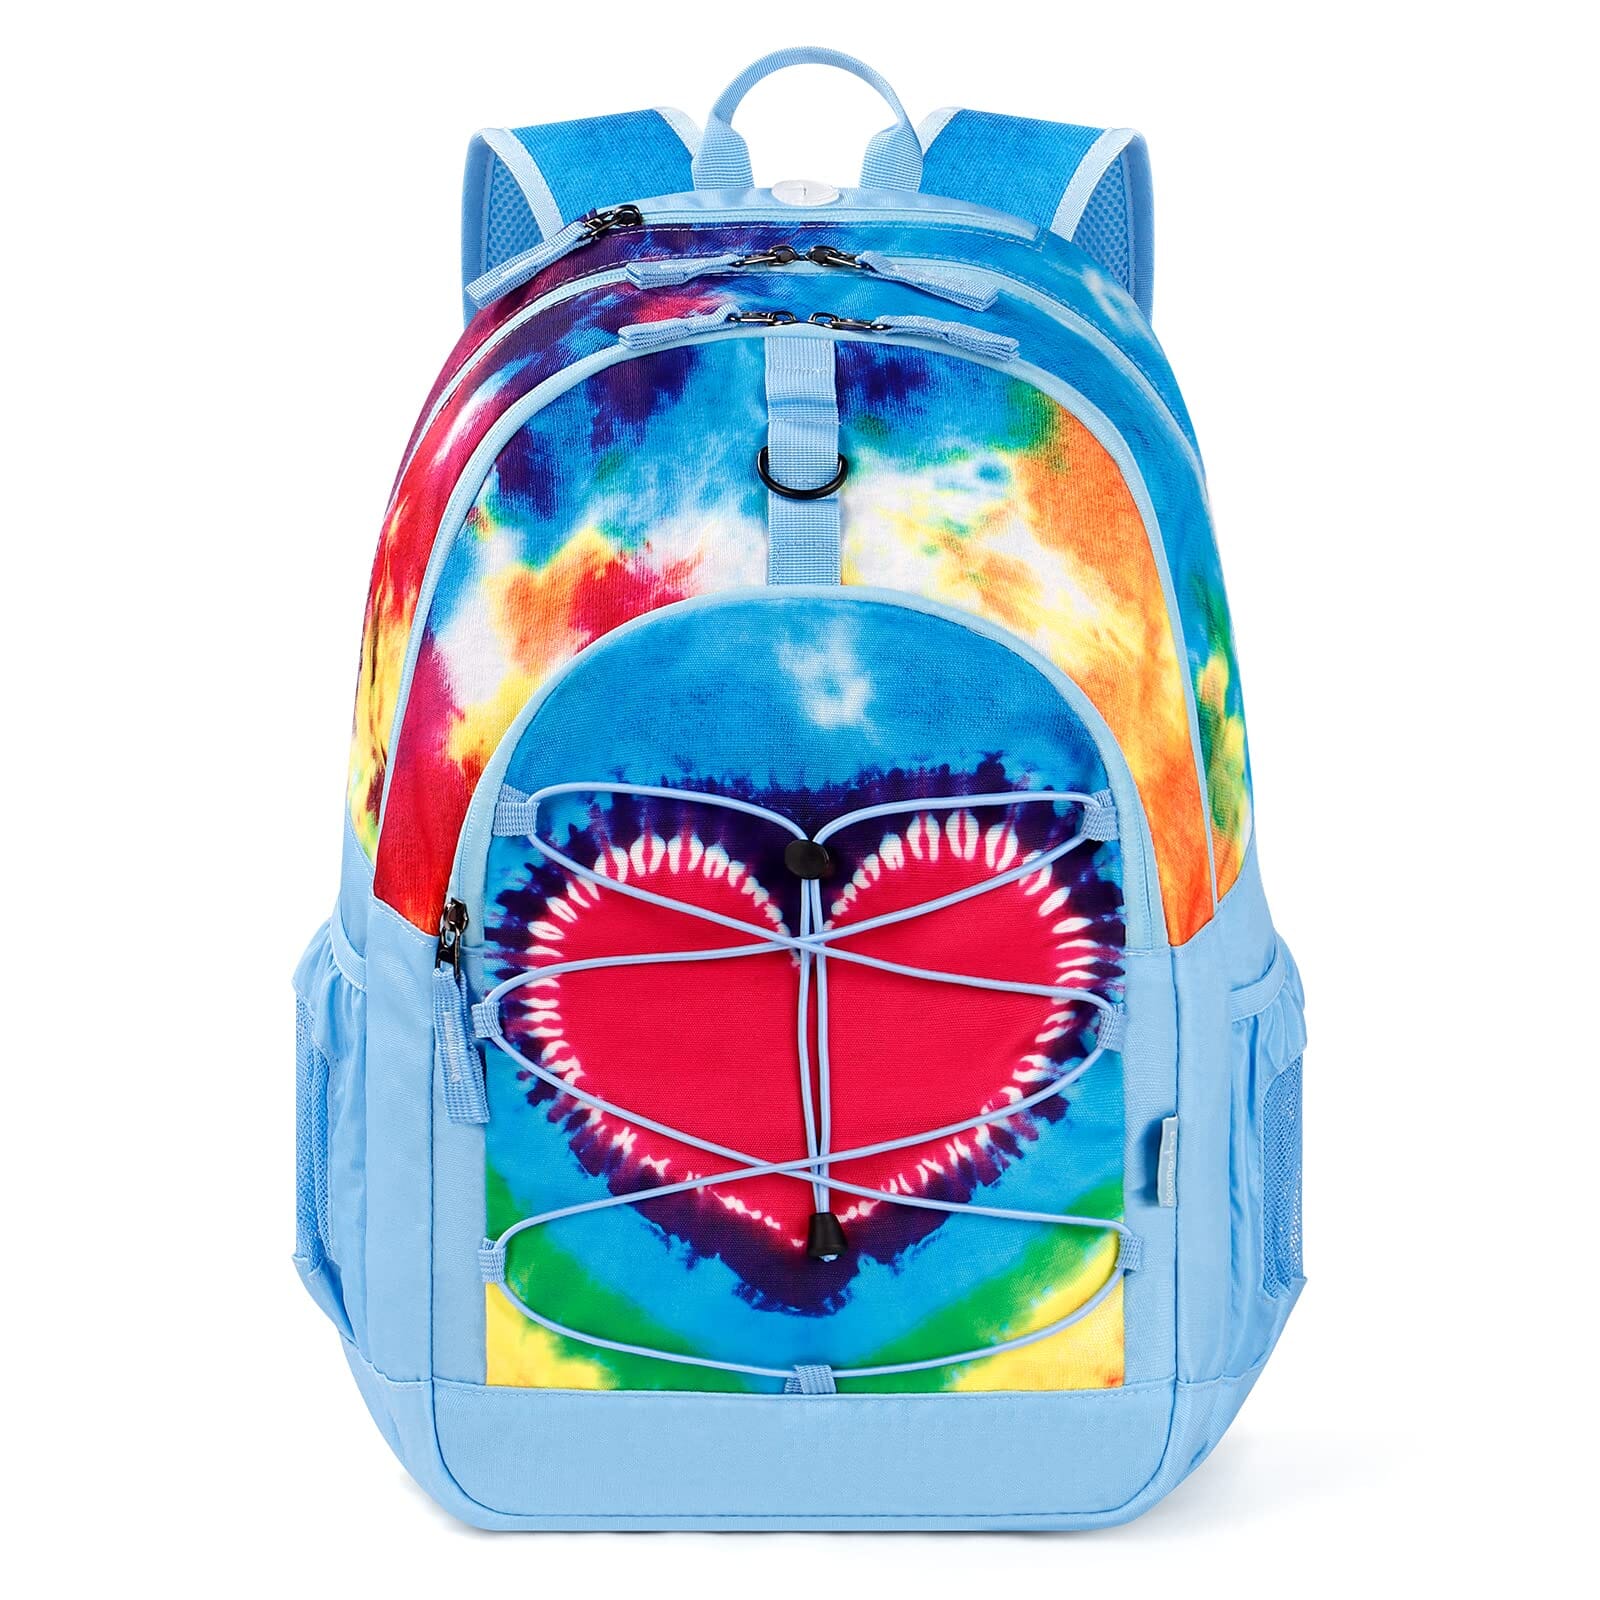 Choco Mocha Blue Backpack for Teen Girls, Travel School Backpack for Kids Middle School Large Bookbag 18 Inch, Tie Dye chocomochakids 